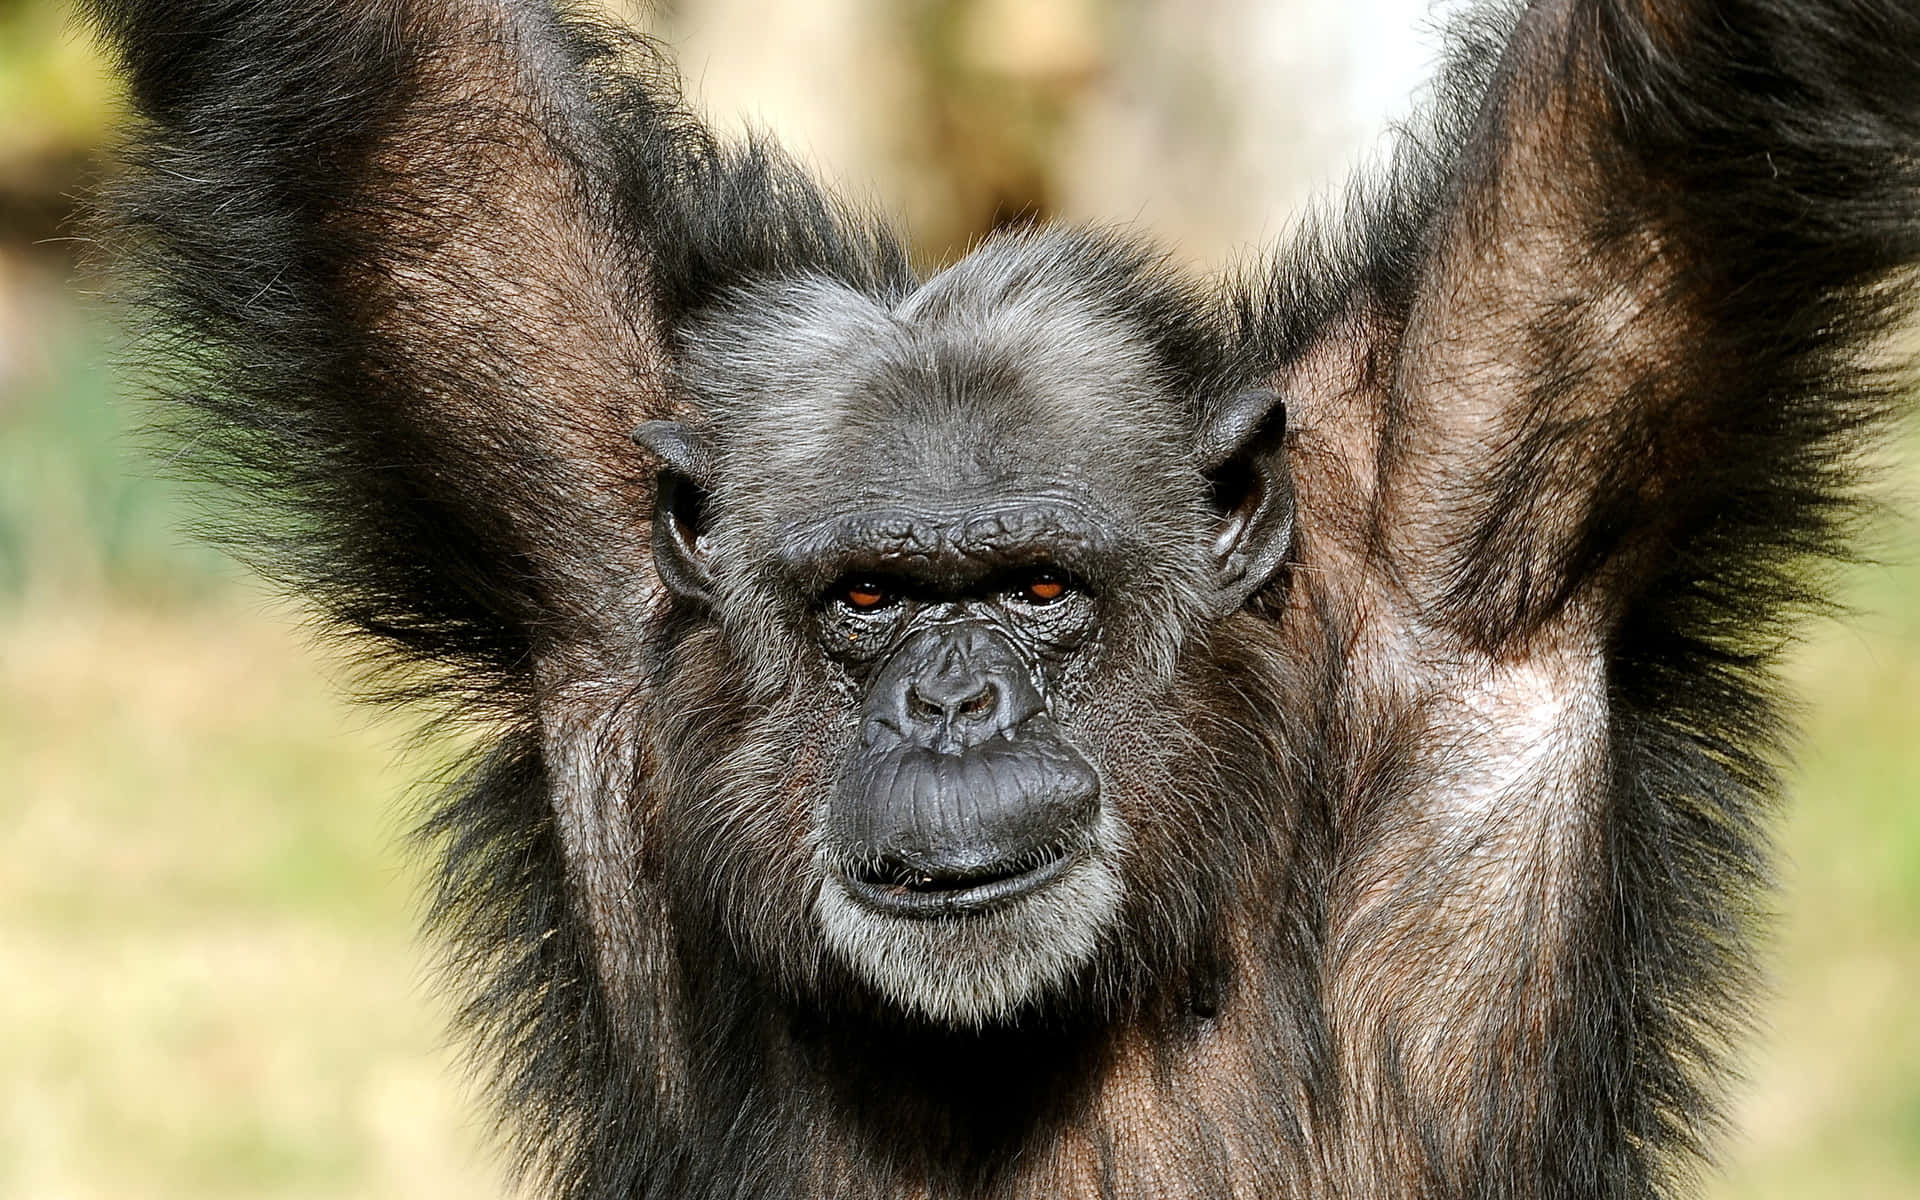 Imagende Un Mono Negro Chimpancé Peludo